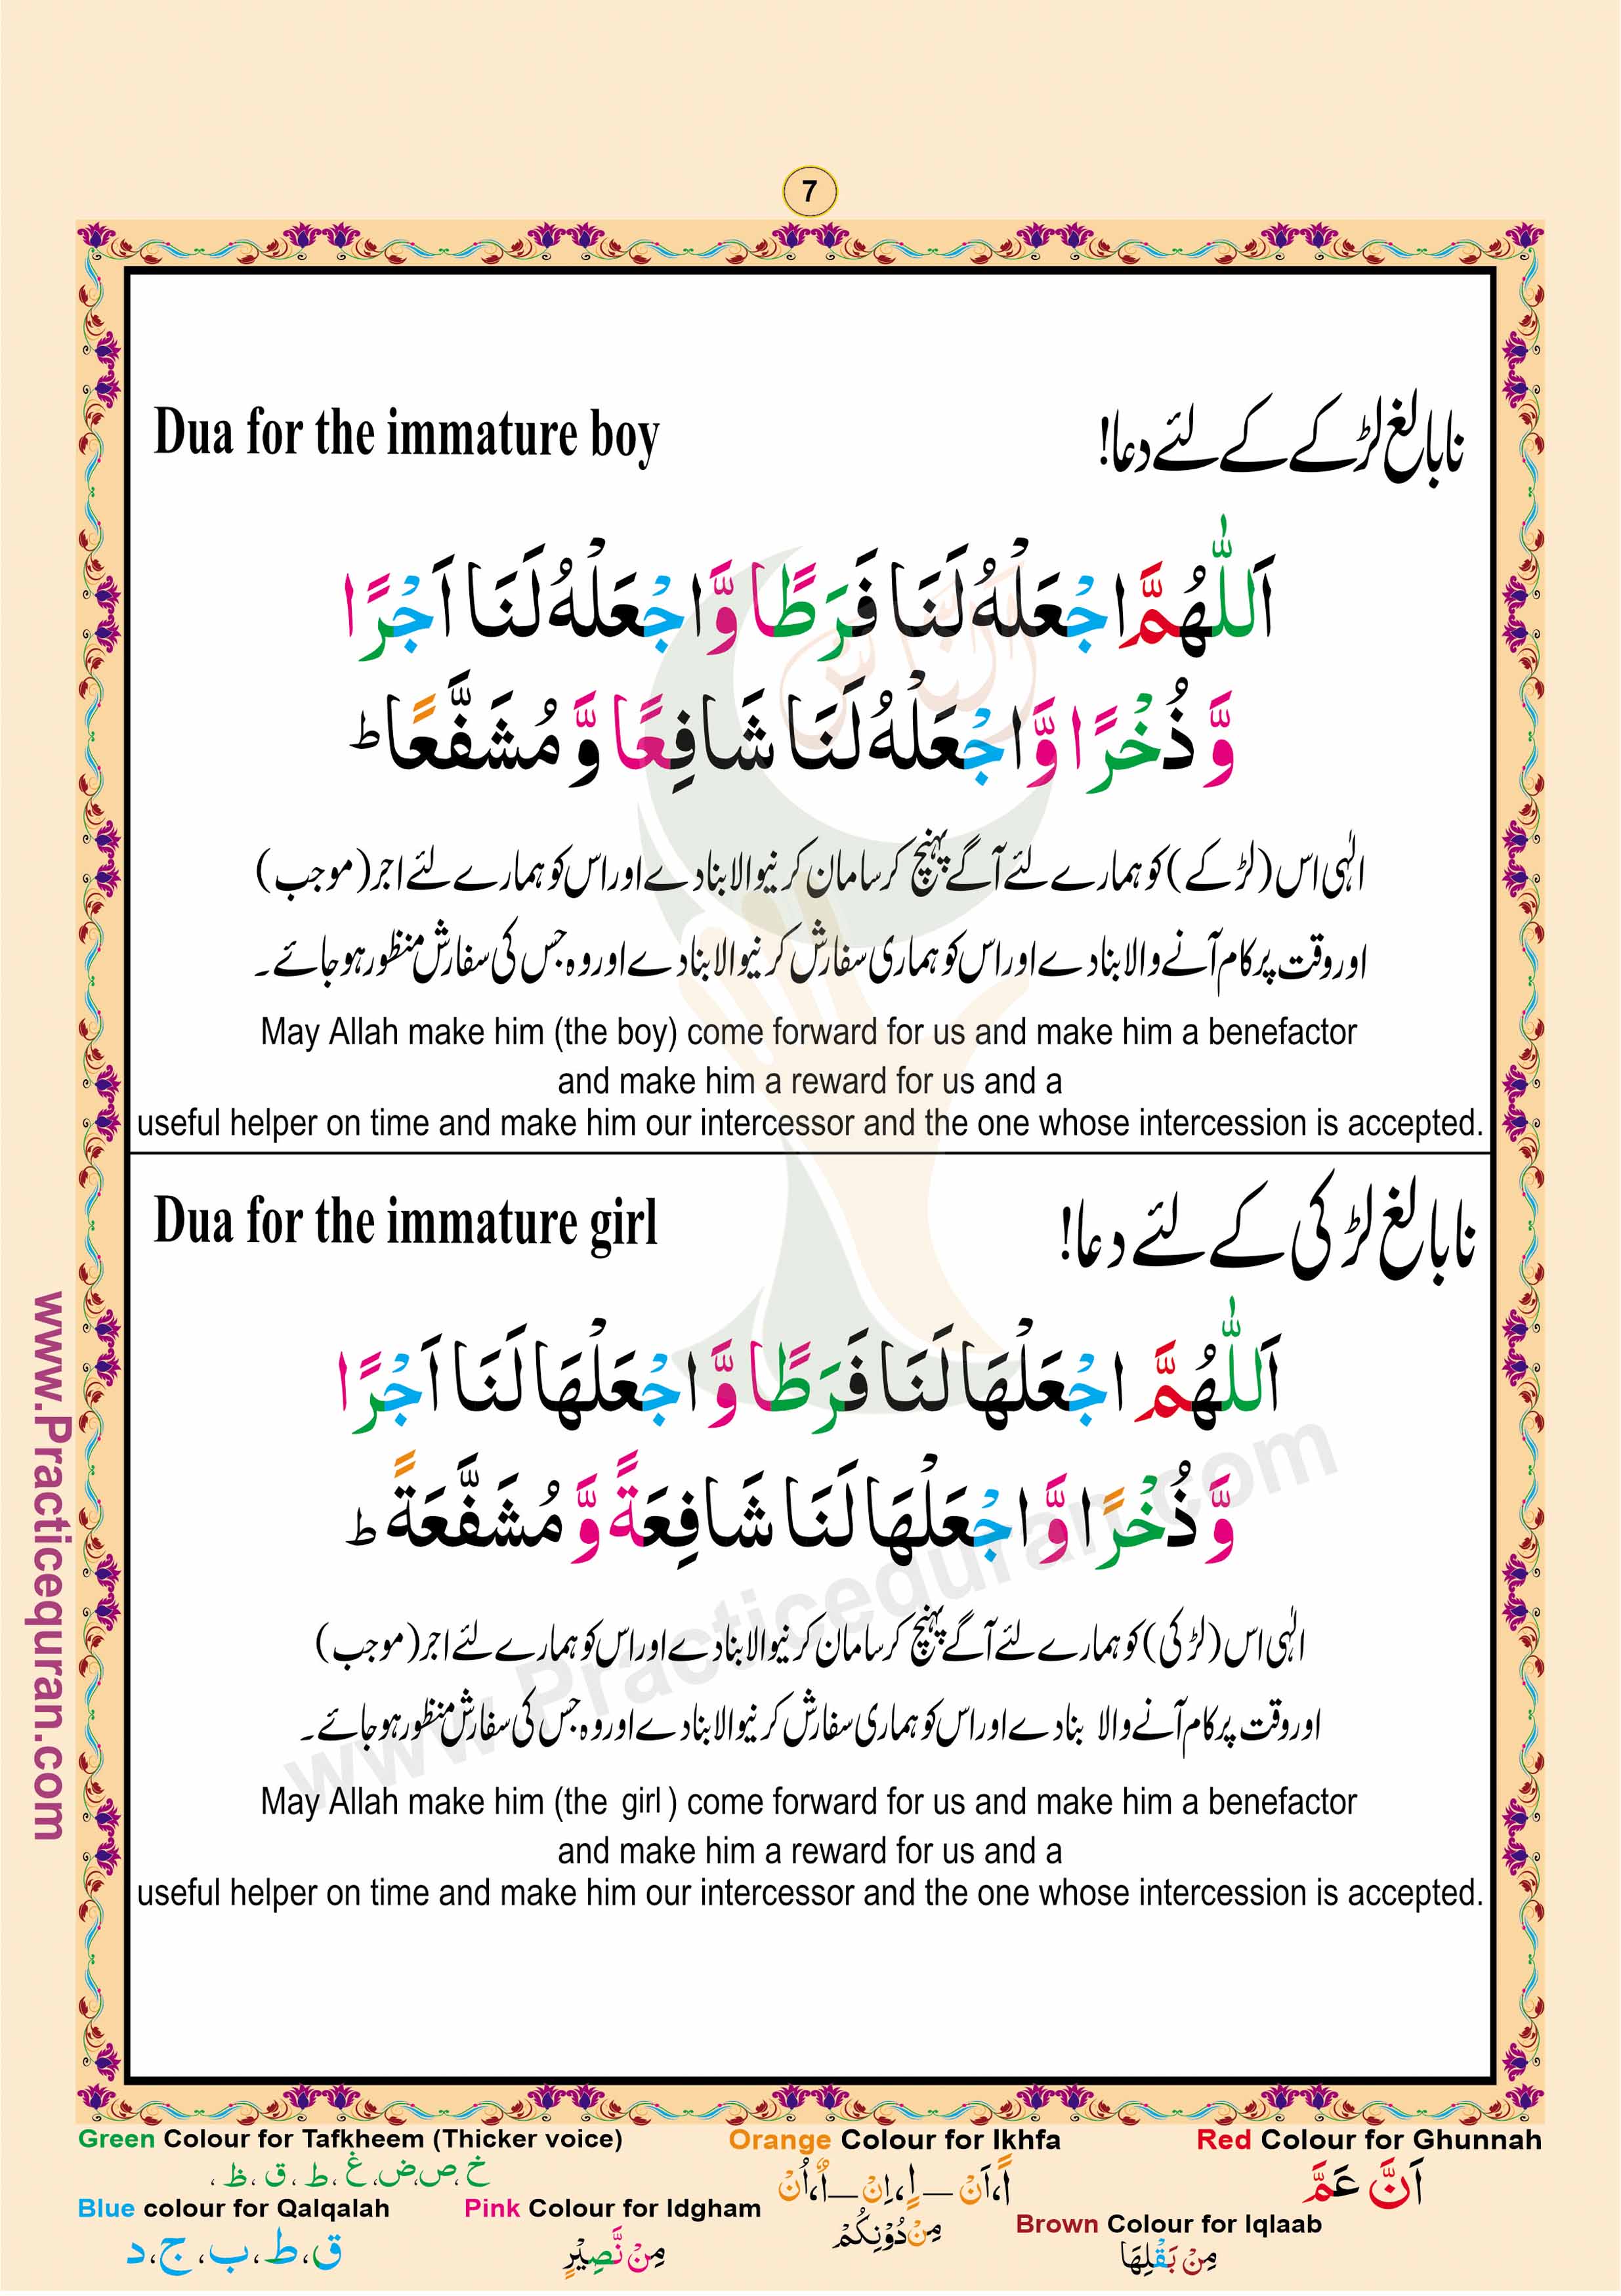 Read Namaz (Salah) Page No 7, Practice Quran